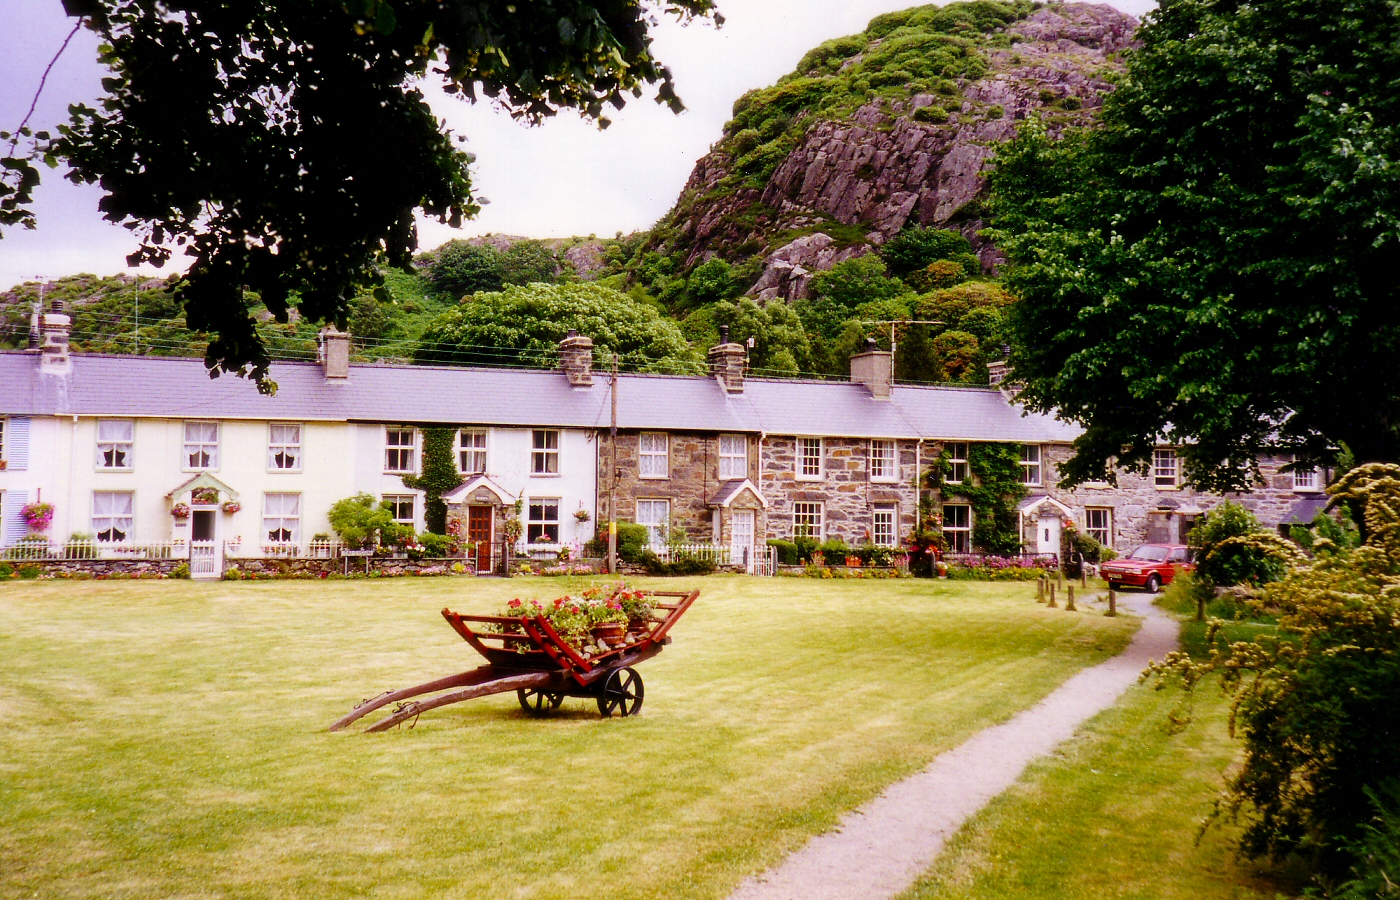 * Classic Cymru - Beddgelert - Looking across the Green towards Sygun Terrace - 1995 (by AJW) *